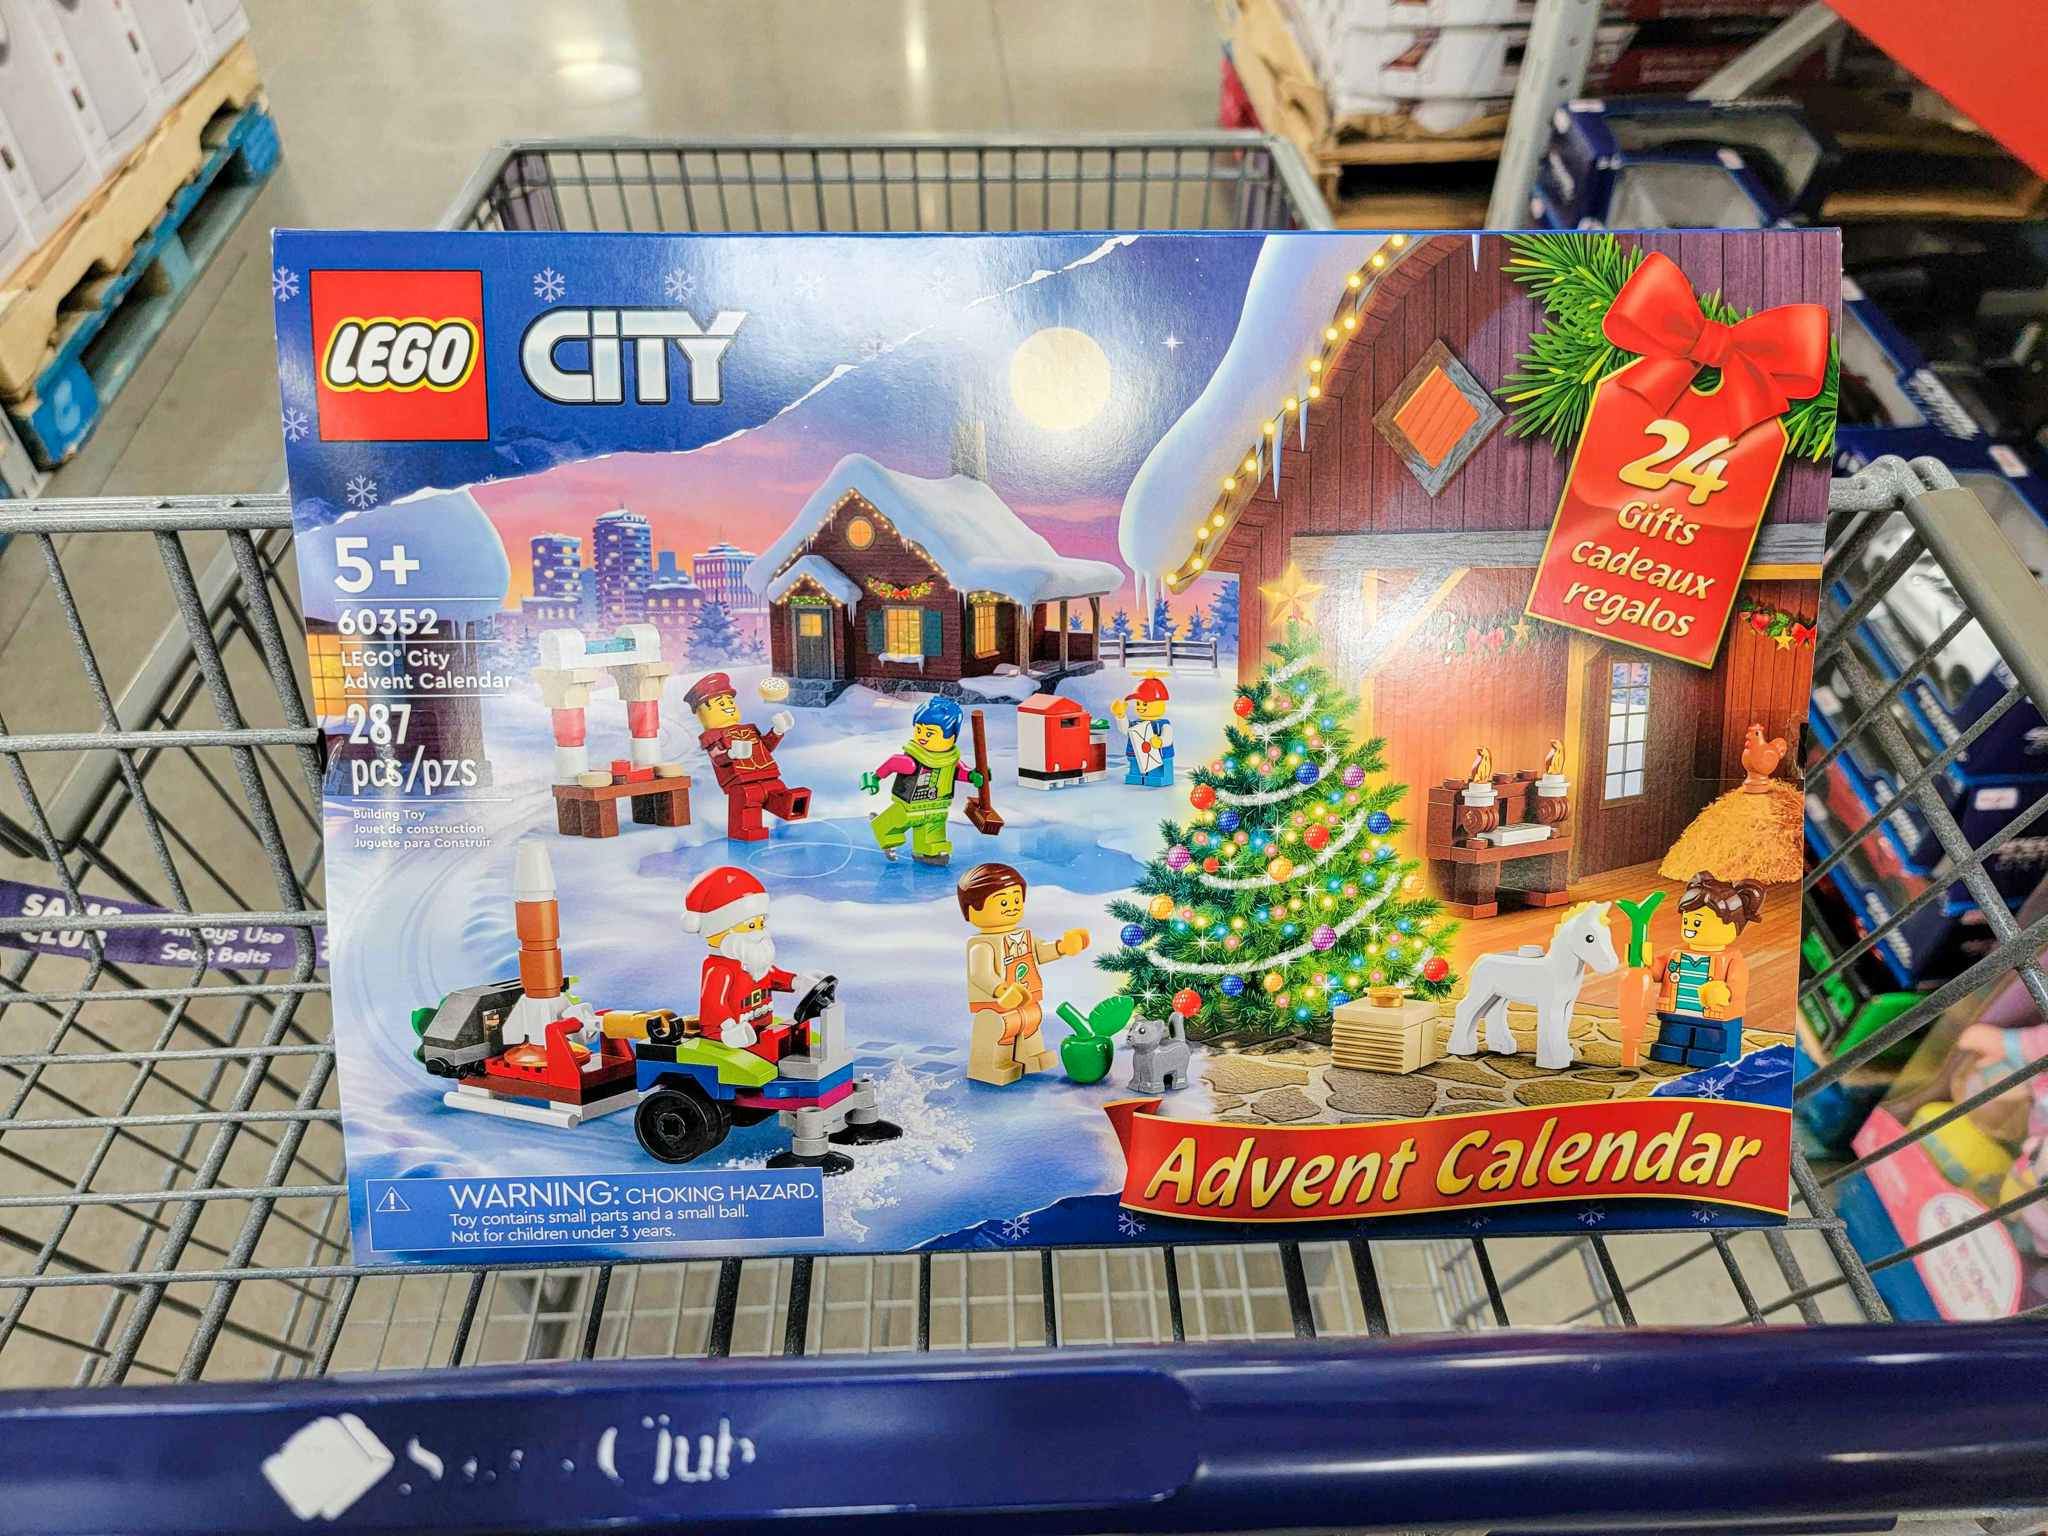 lego city advent calendar in a cart